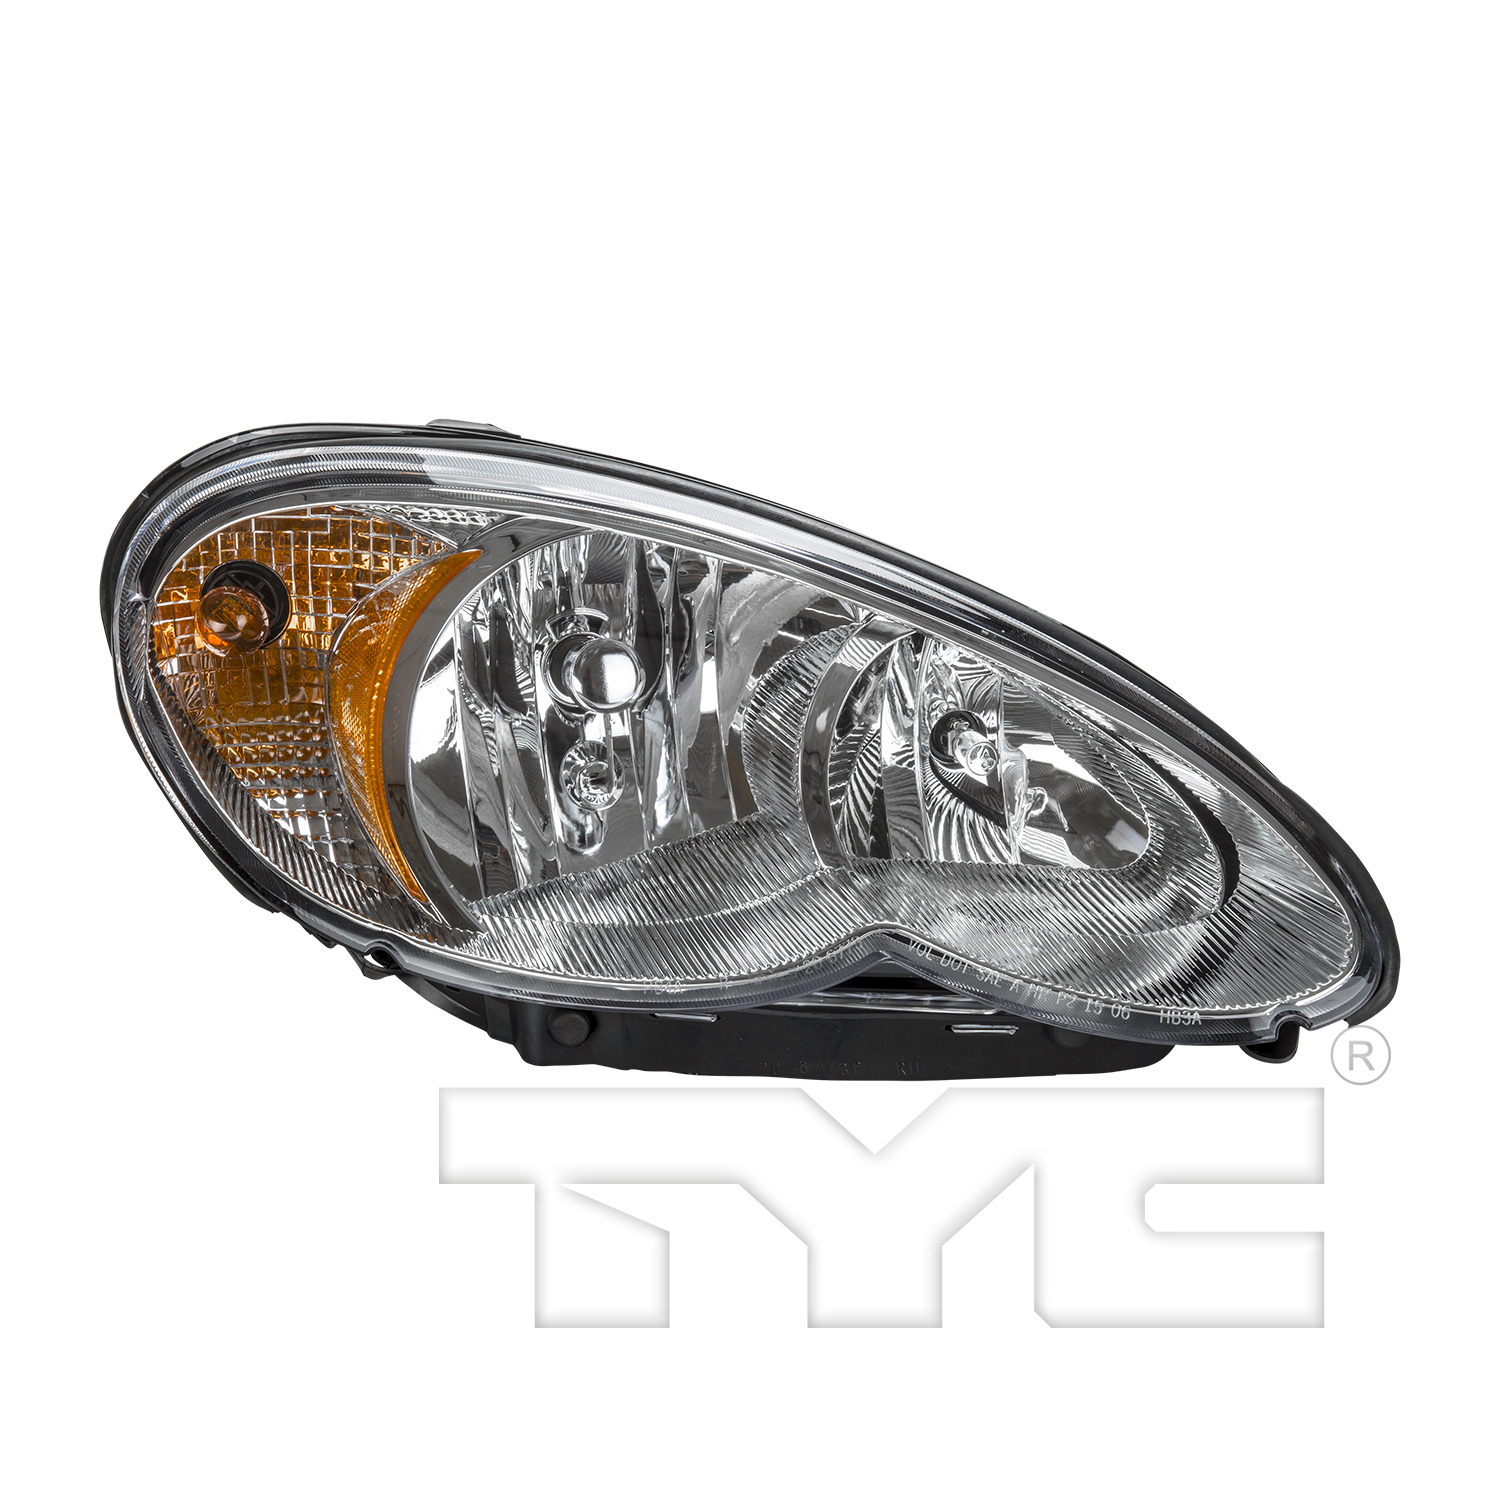 Aftermarket HEADLIGHTS for CHRYSLER - PT CRUISER, PT CRUISER,09-10,RT Headlamp assy composite